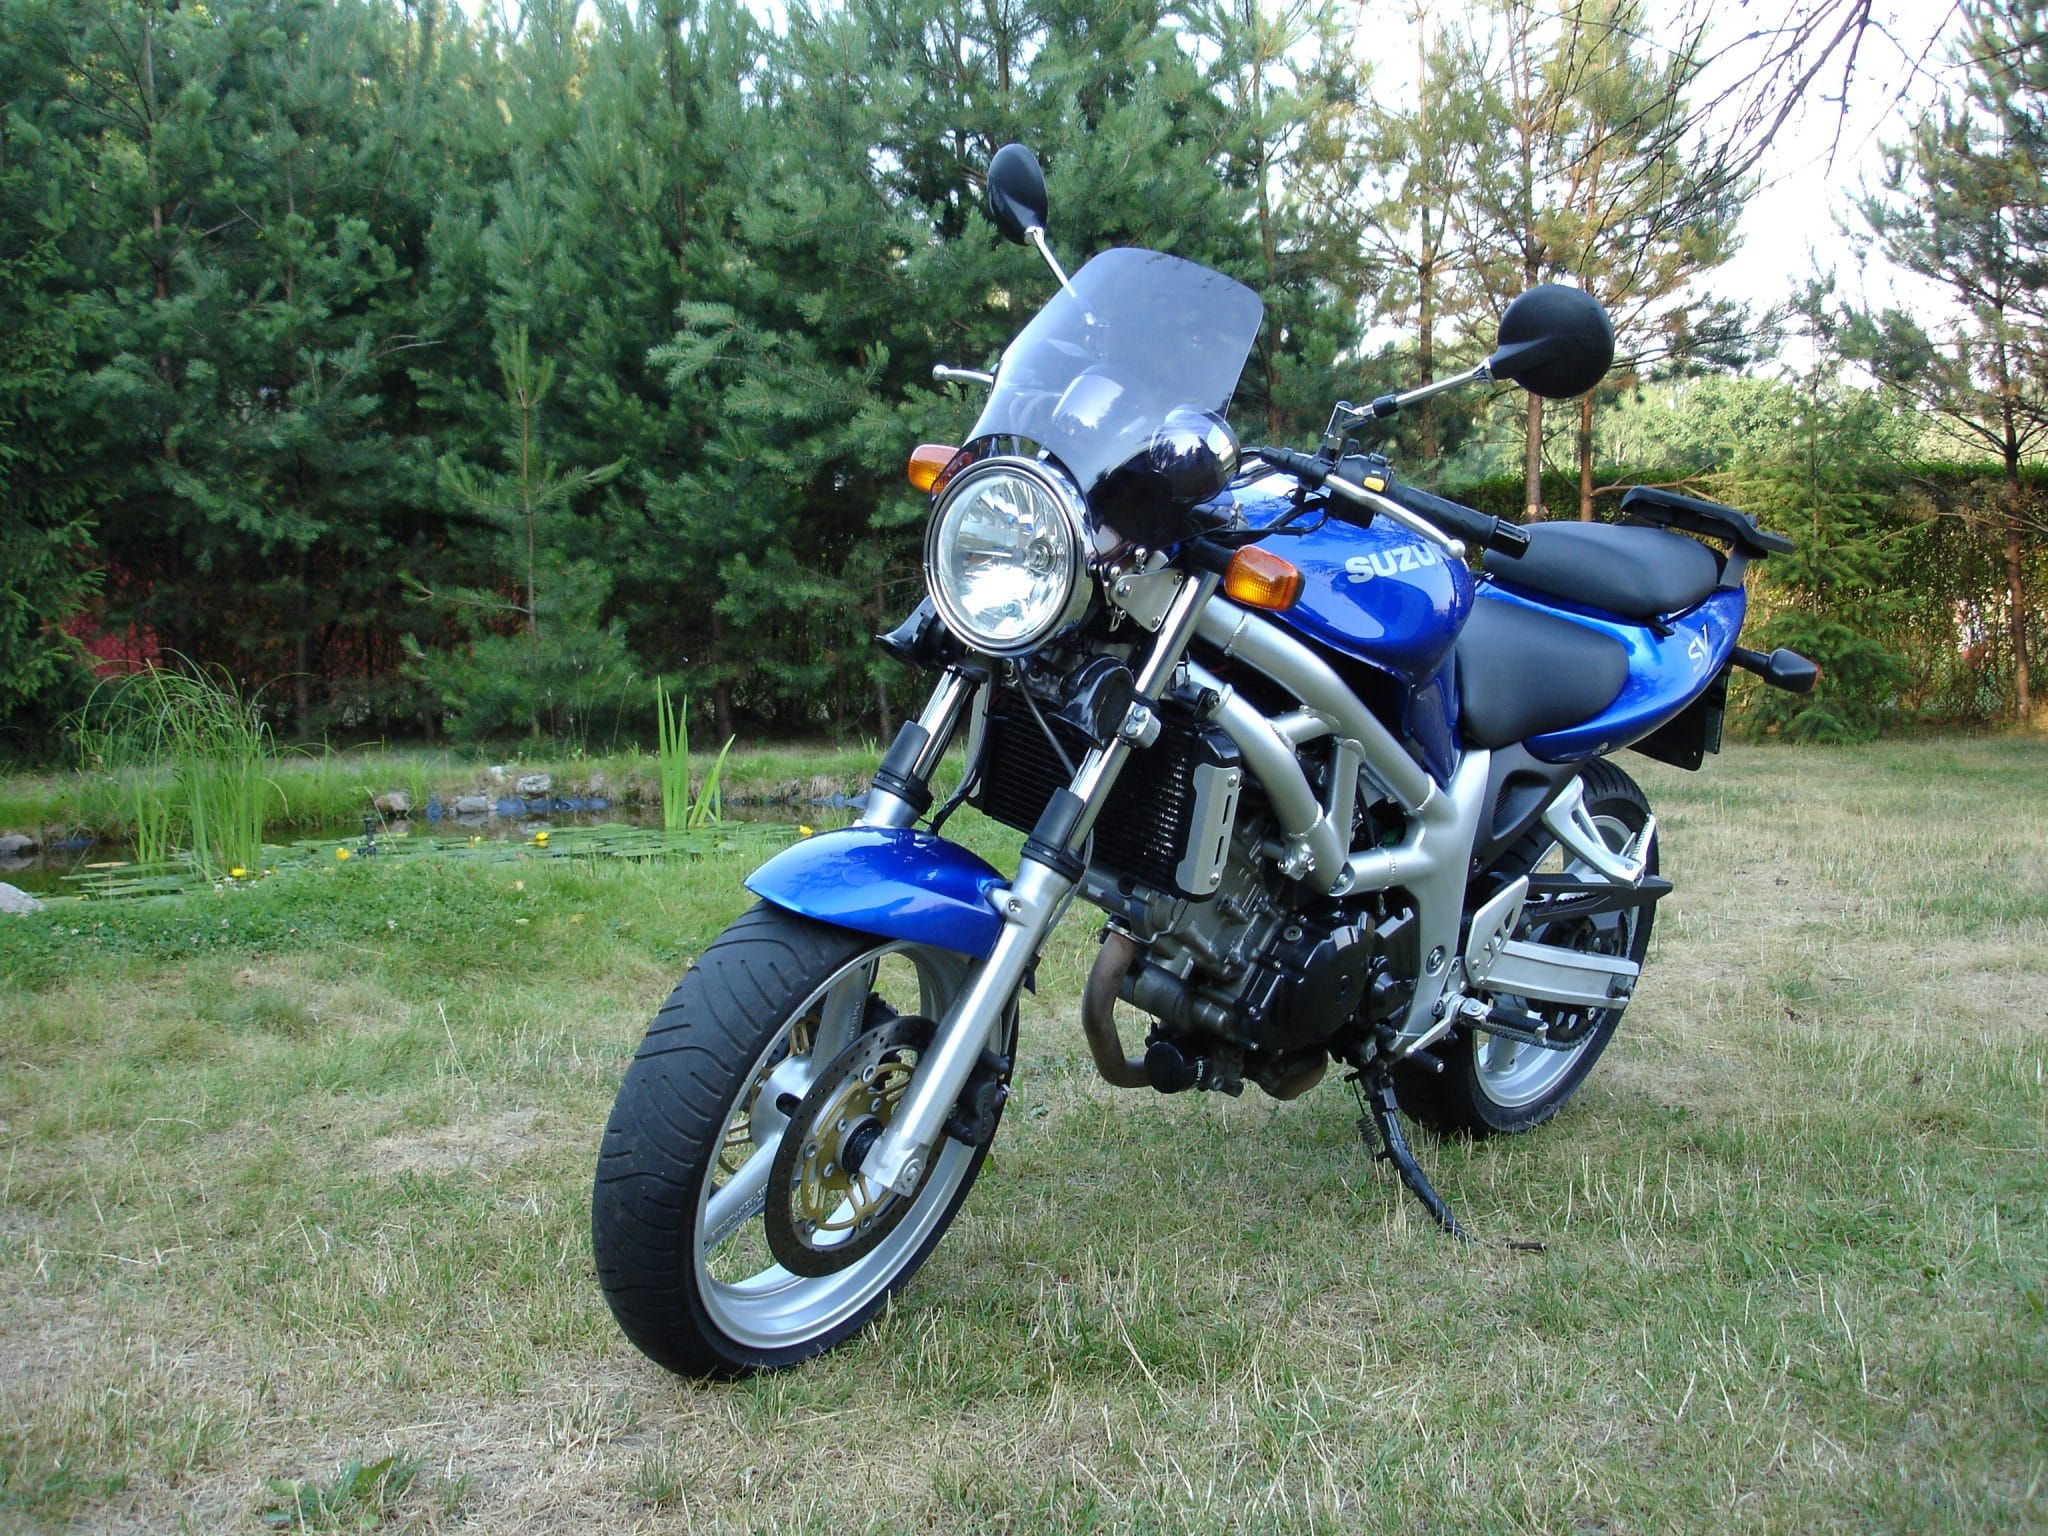 2003 Suzuki SV650 Motorcycle How To